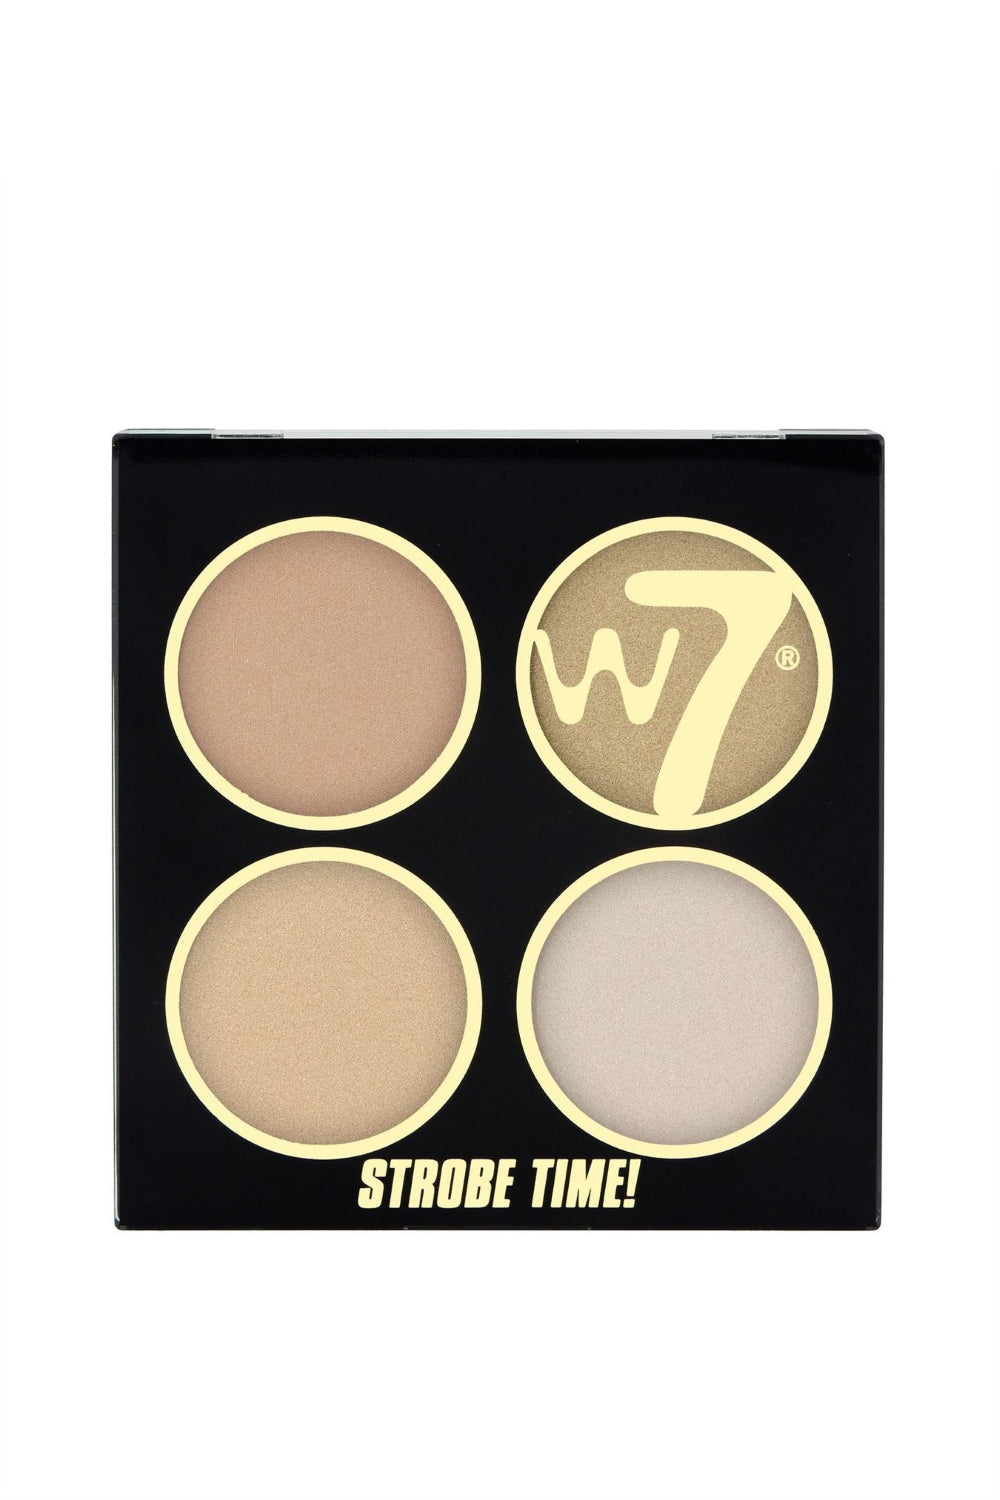 W7- Strobe Time Shimmering Powders (It's Glow Time)